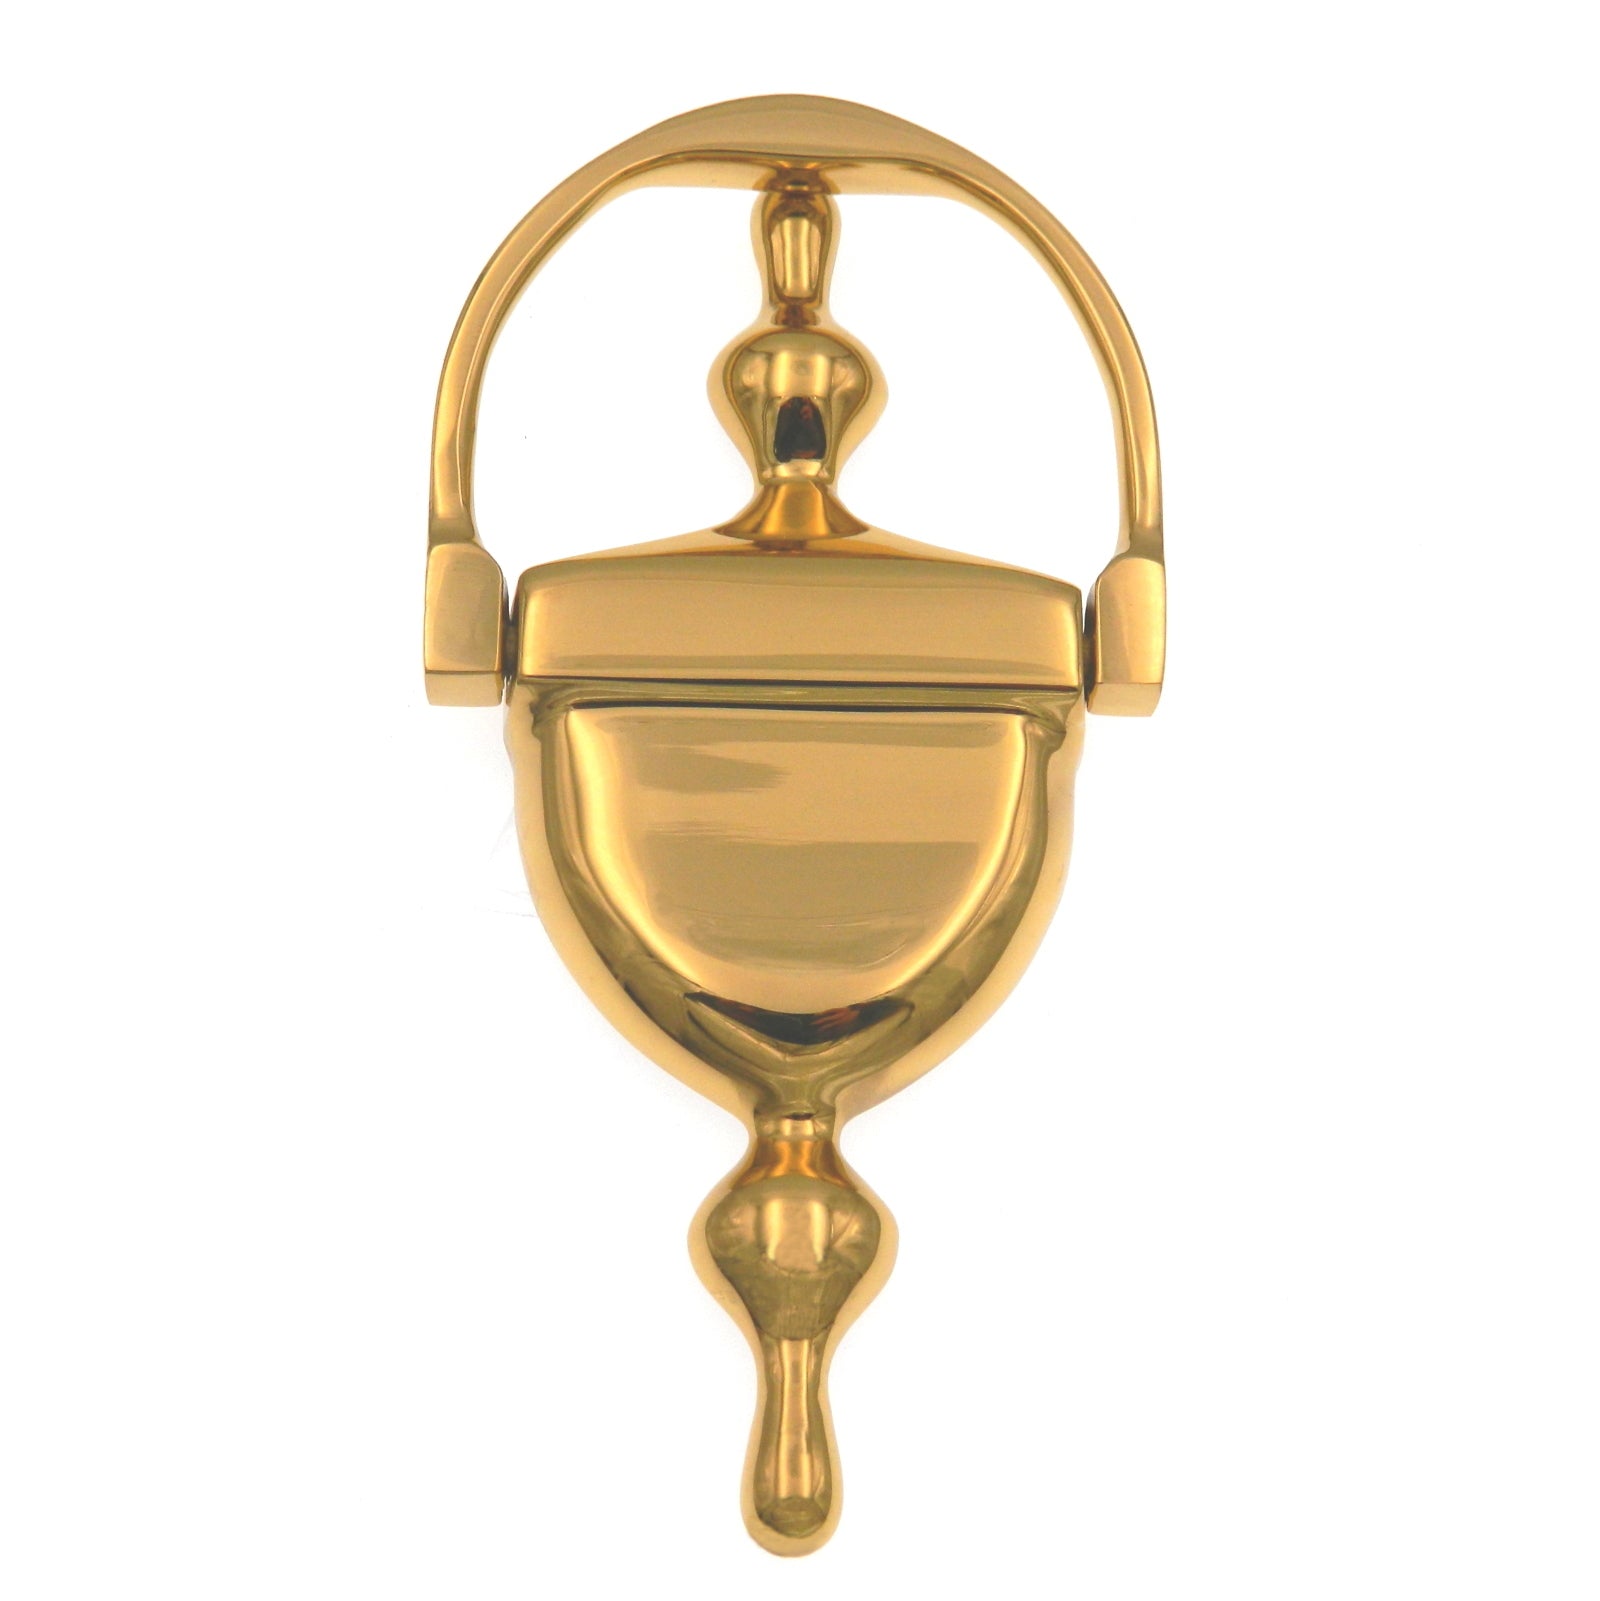 Warwick Classic Traditional Standard Door Knocker, Polished Brass DA3002PB